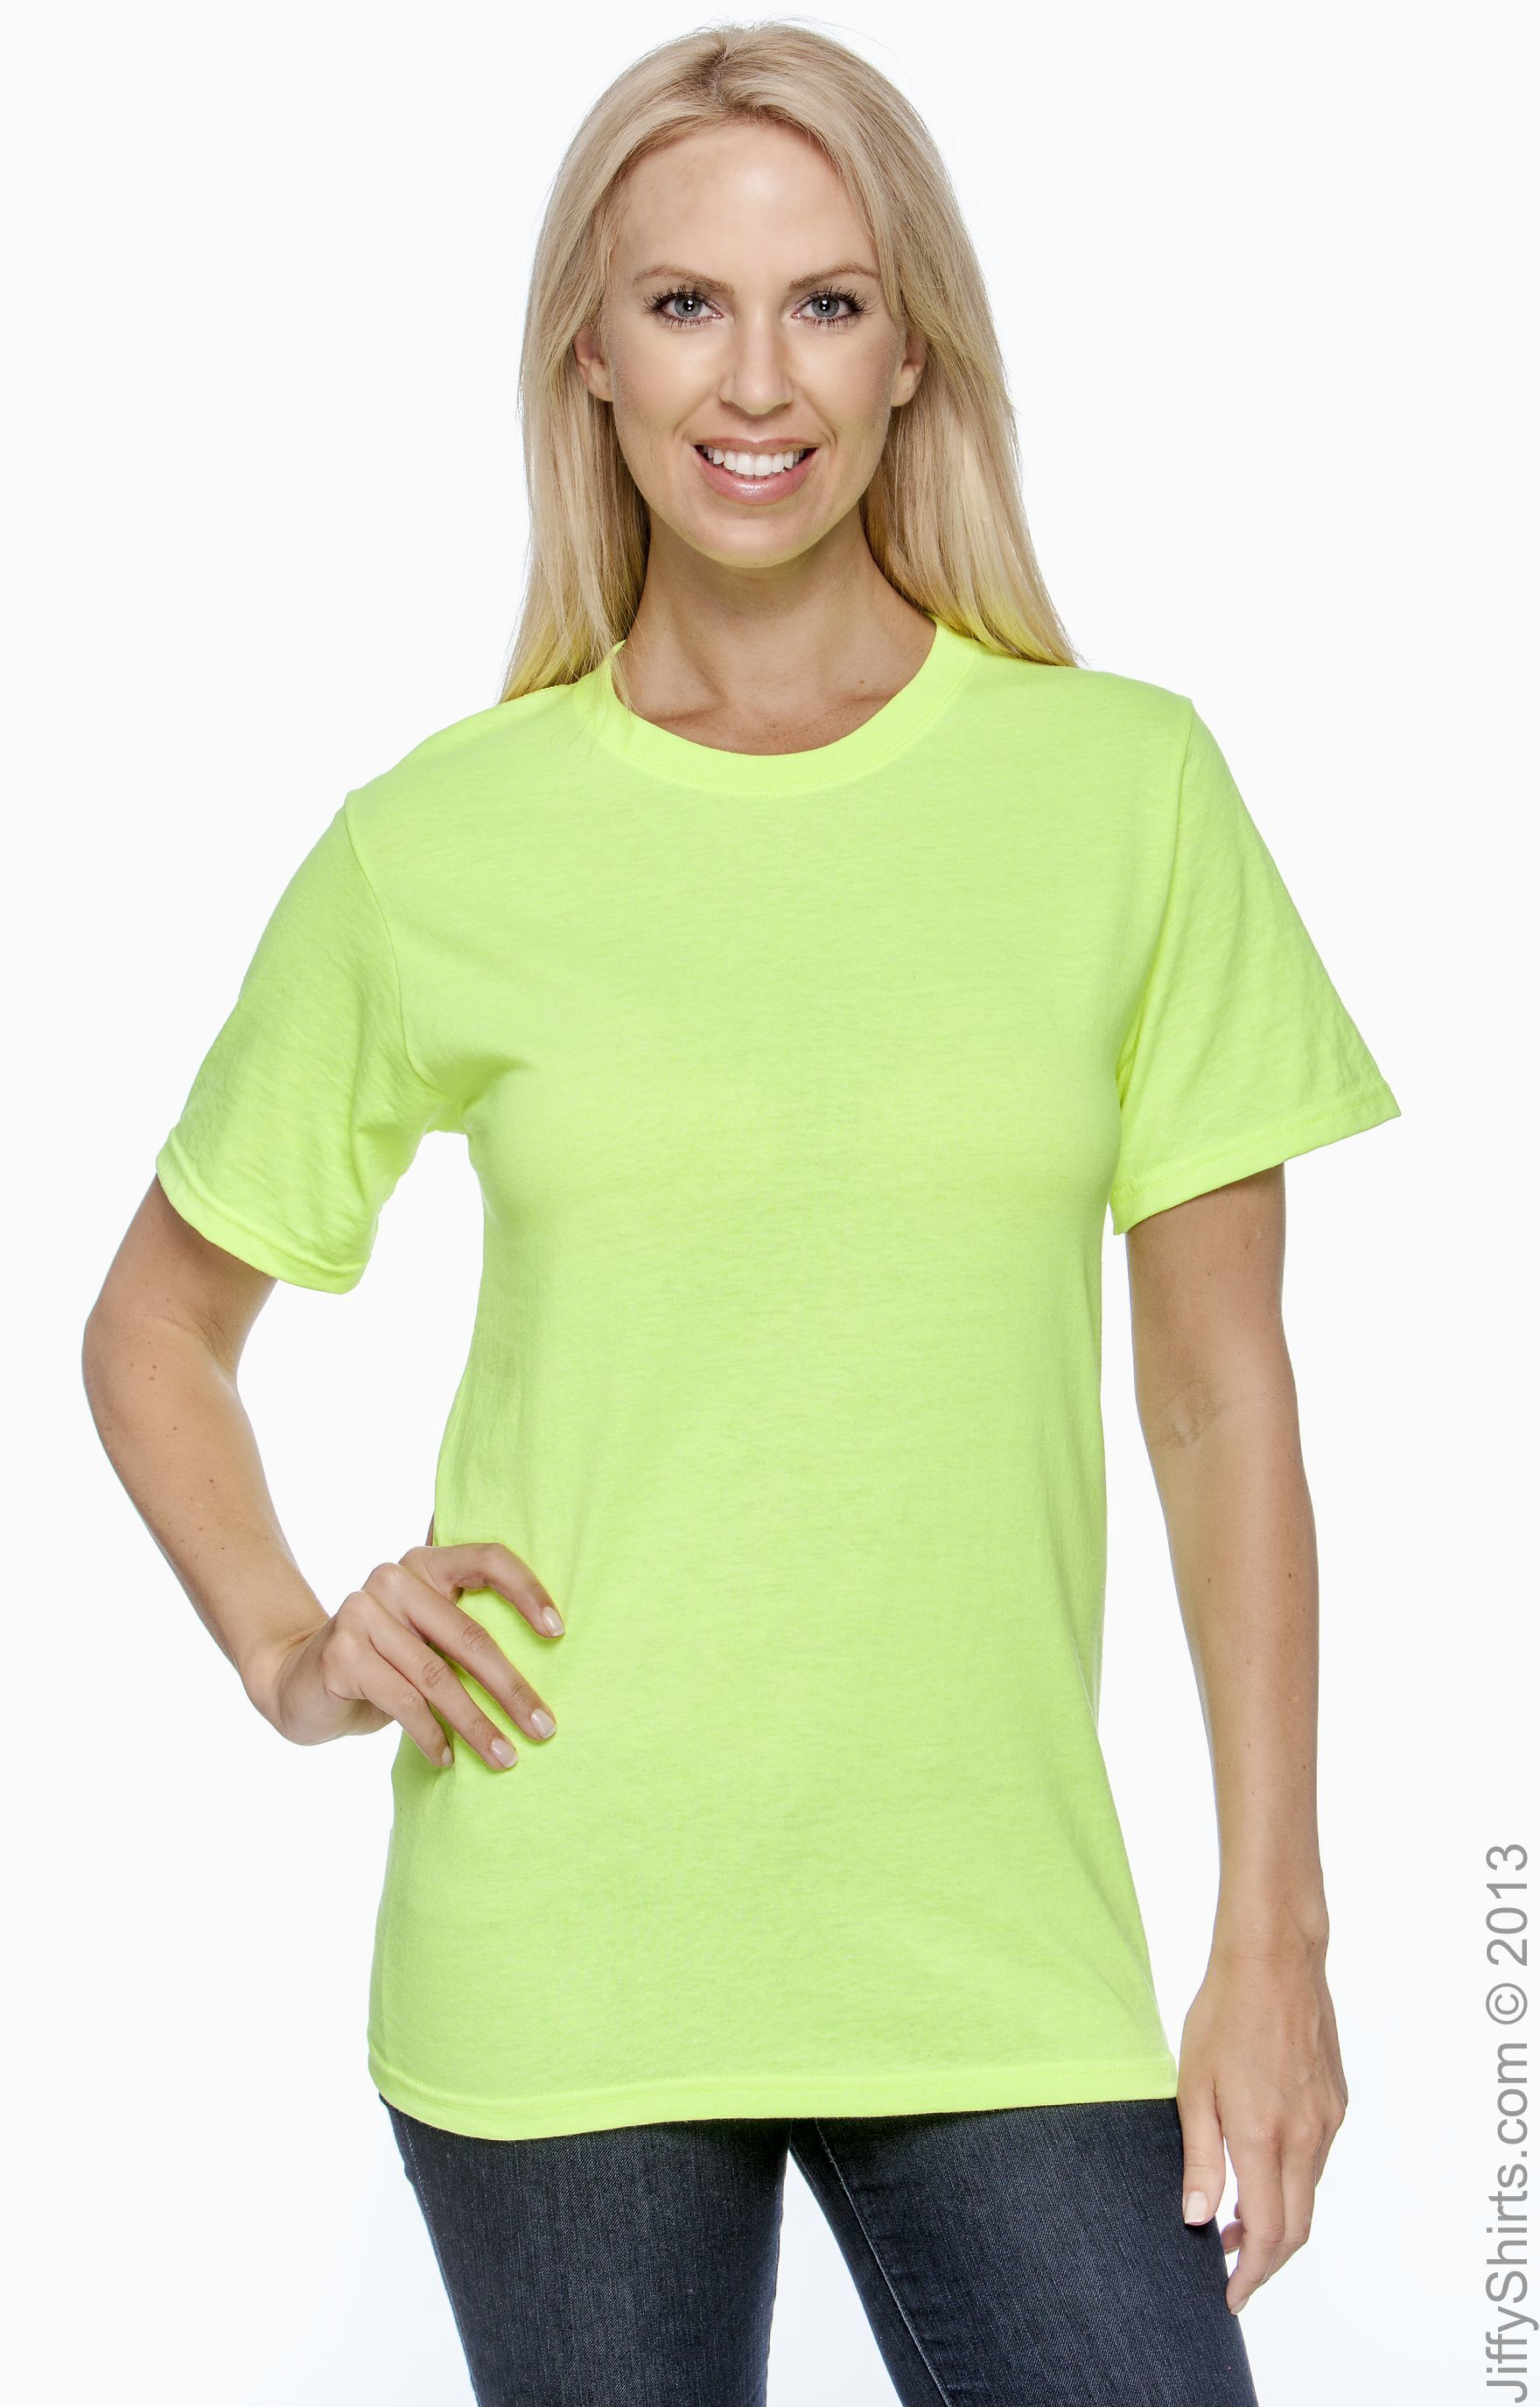 safety green dri fit shirts